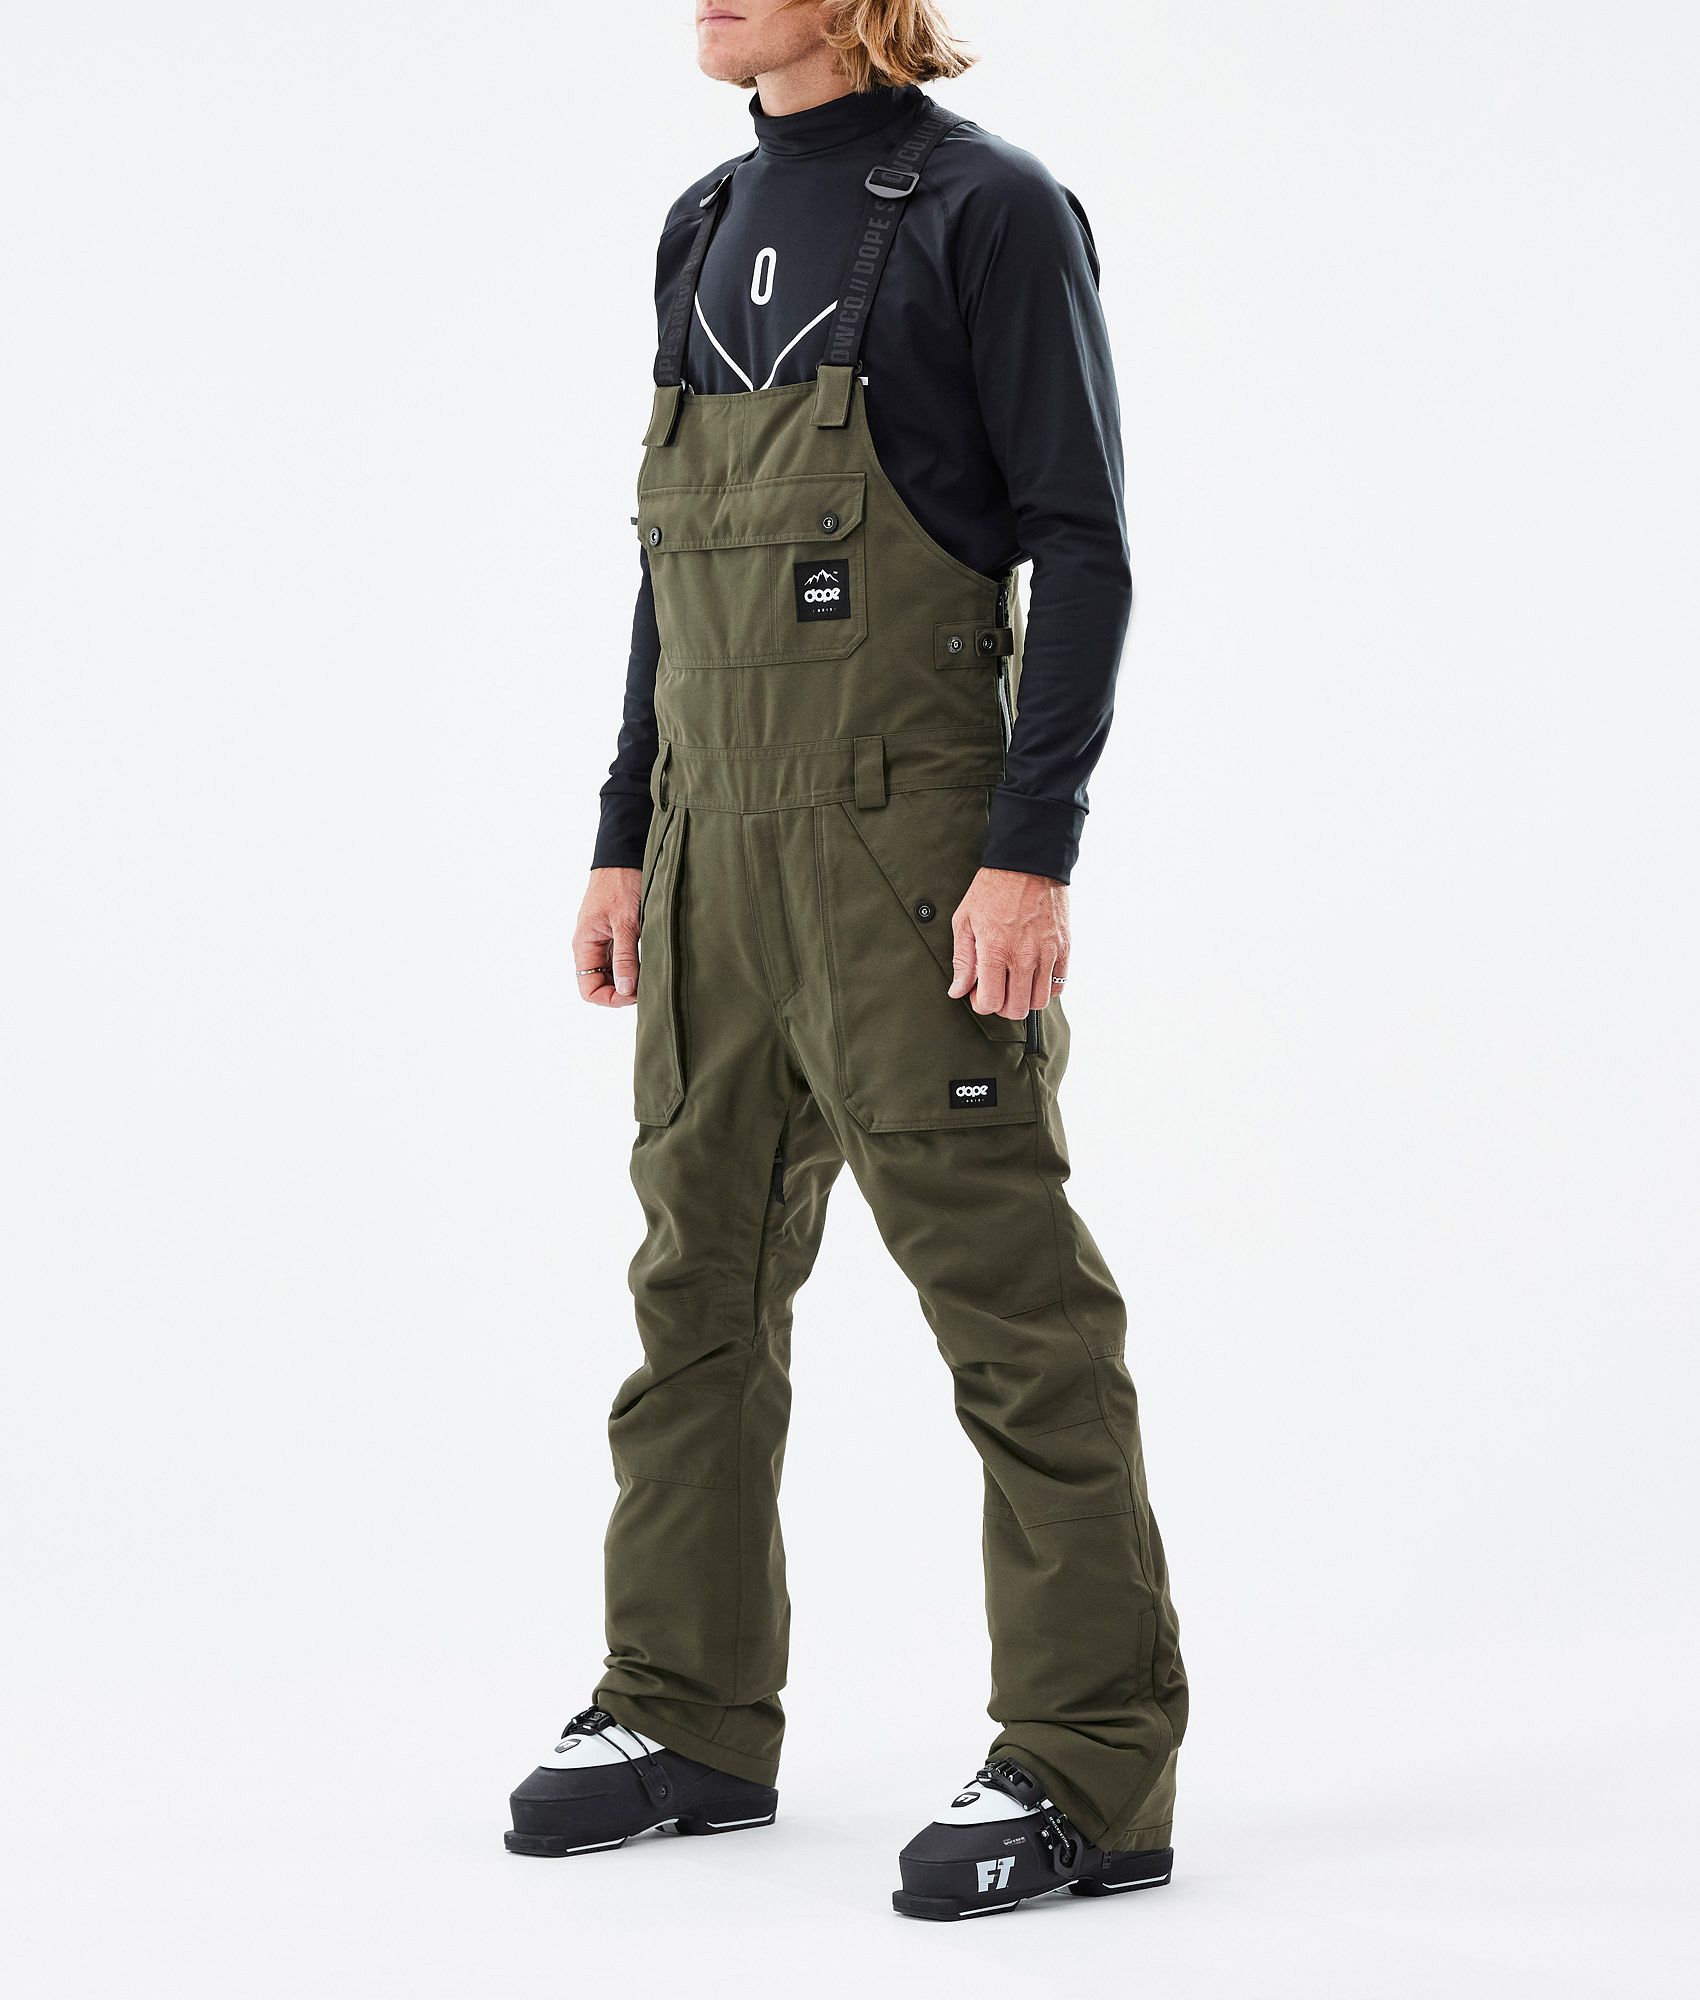 green clothing Bib pants-